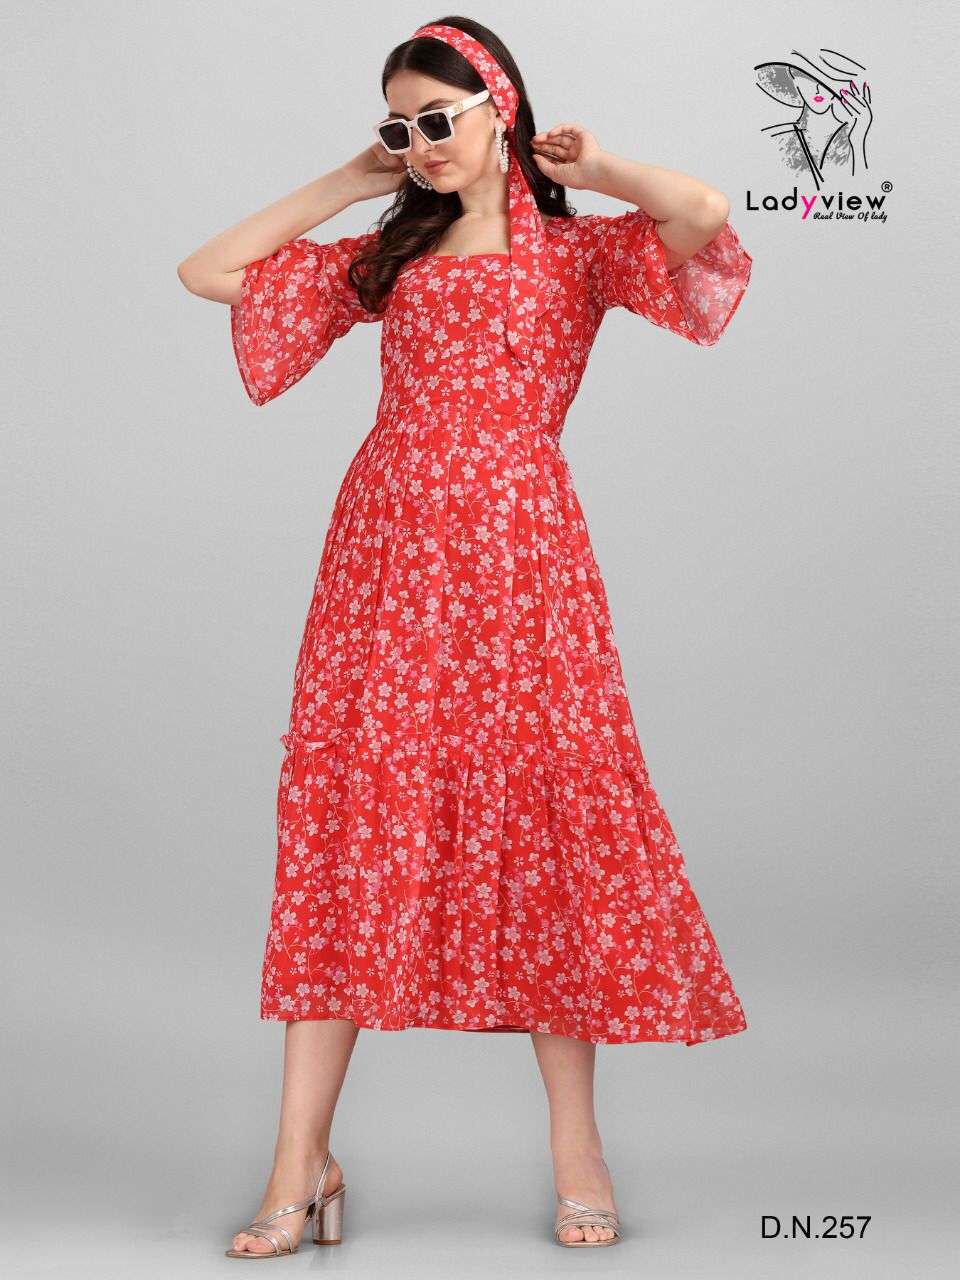 Ladyview Fusion Catalog Georgette Wear Designer Kurtis For Women